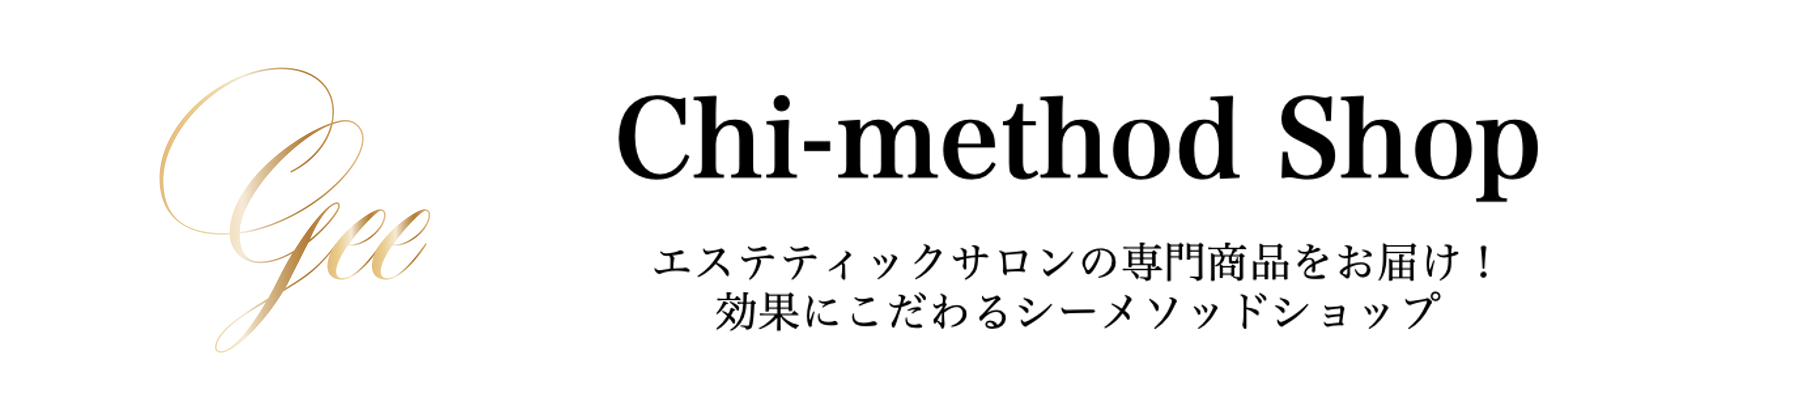 Chi-method Shop - 륱 - Produced by Chi-method Partner